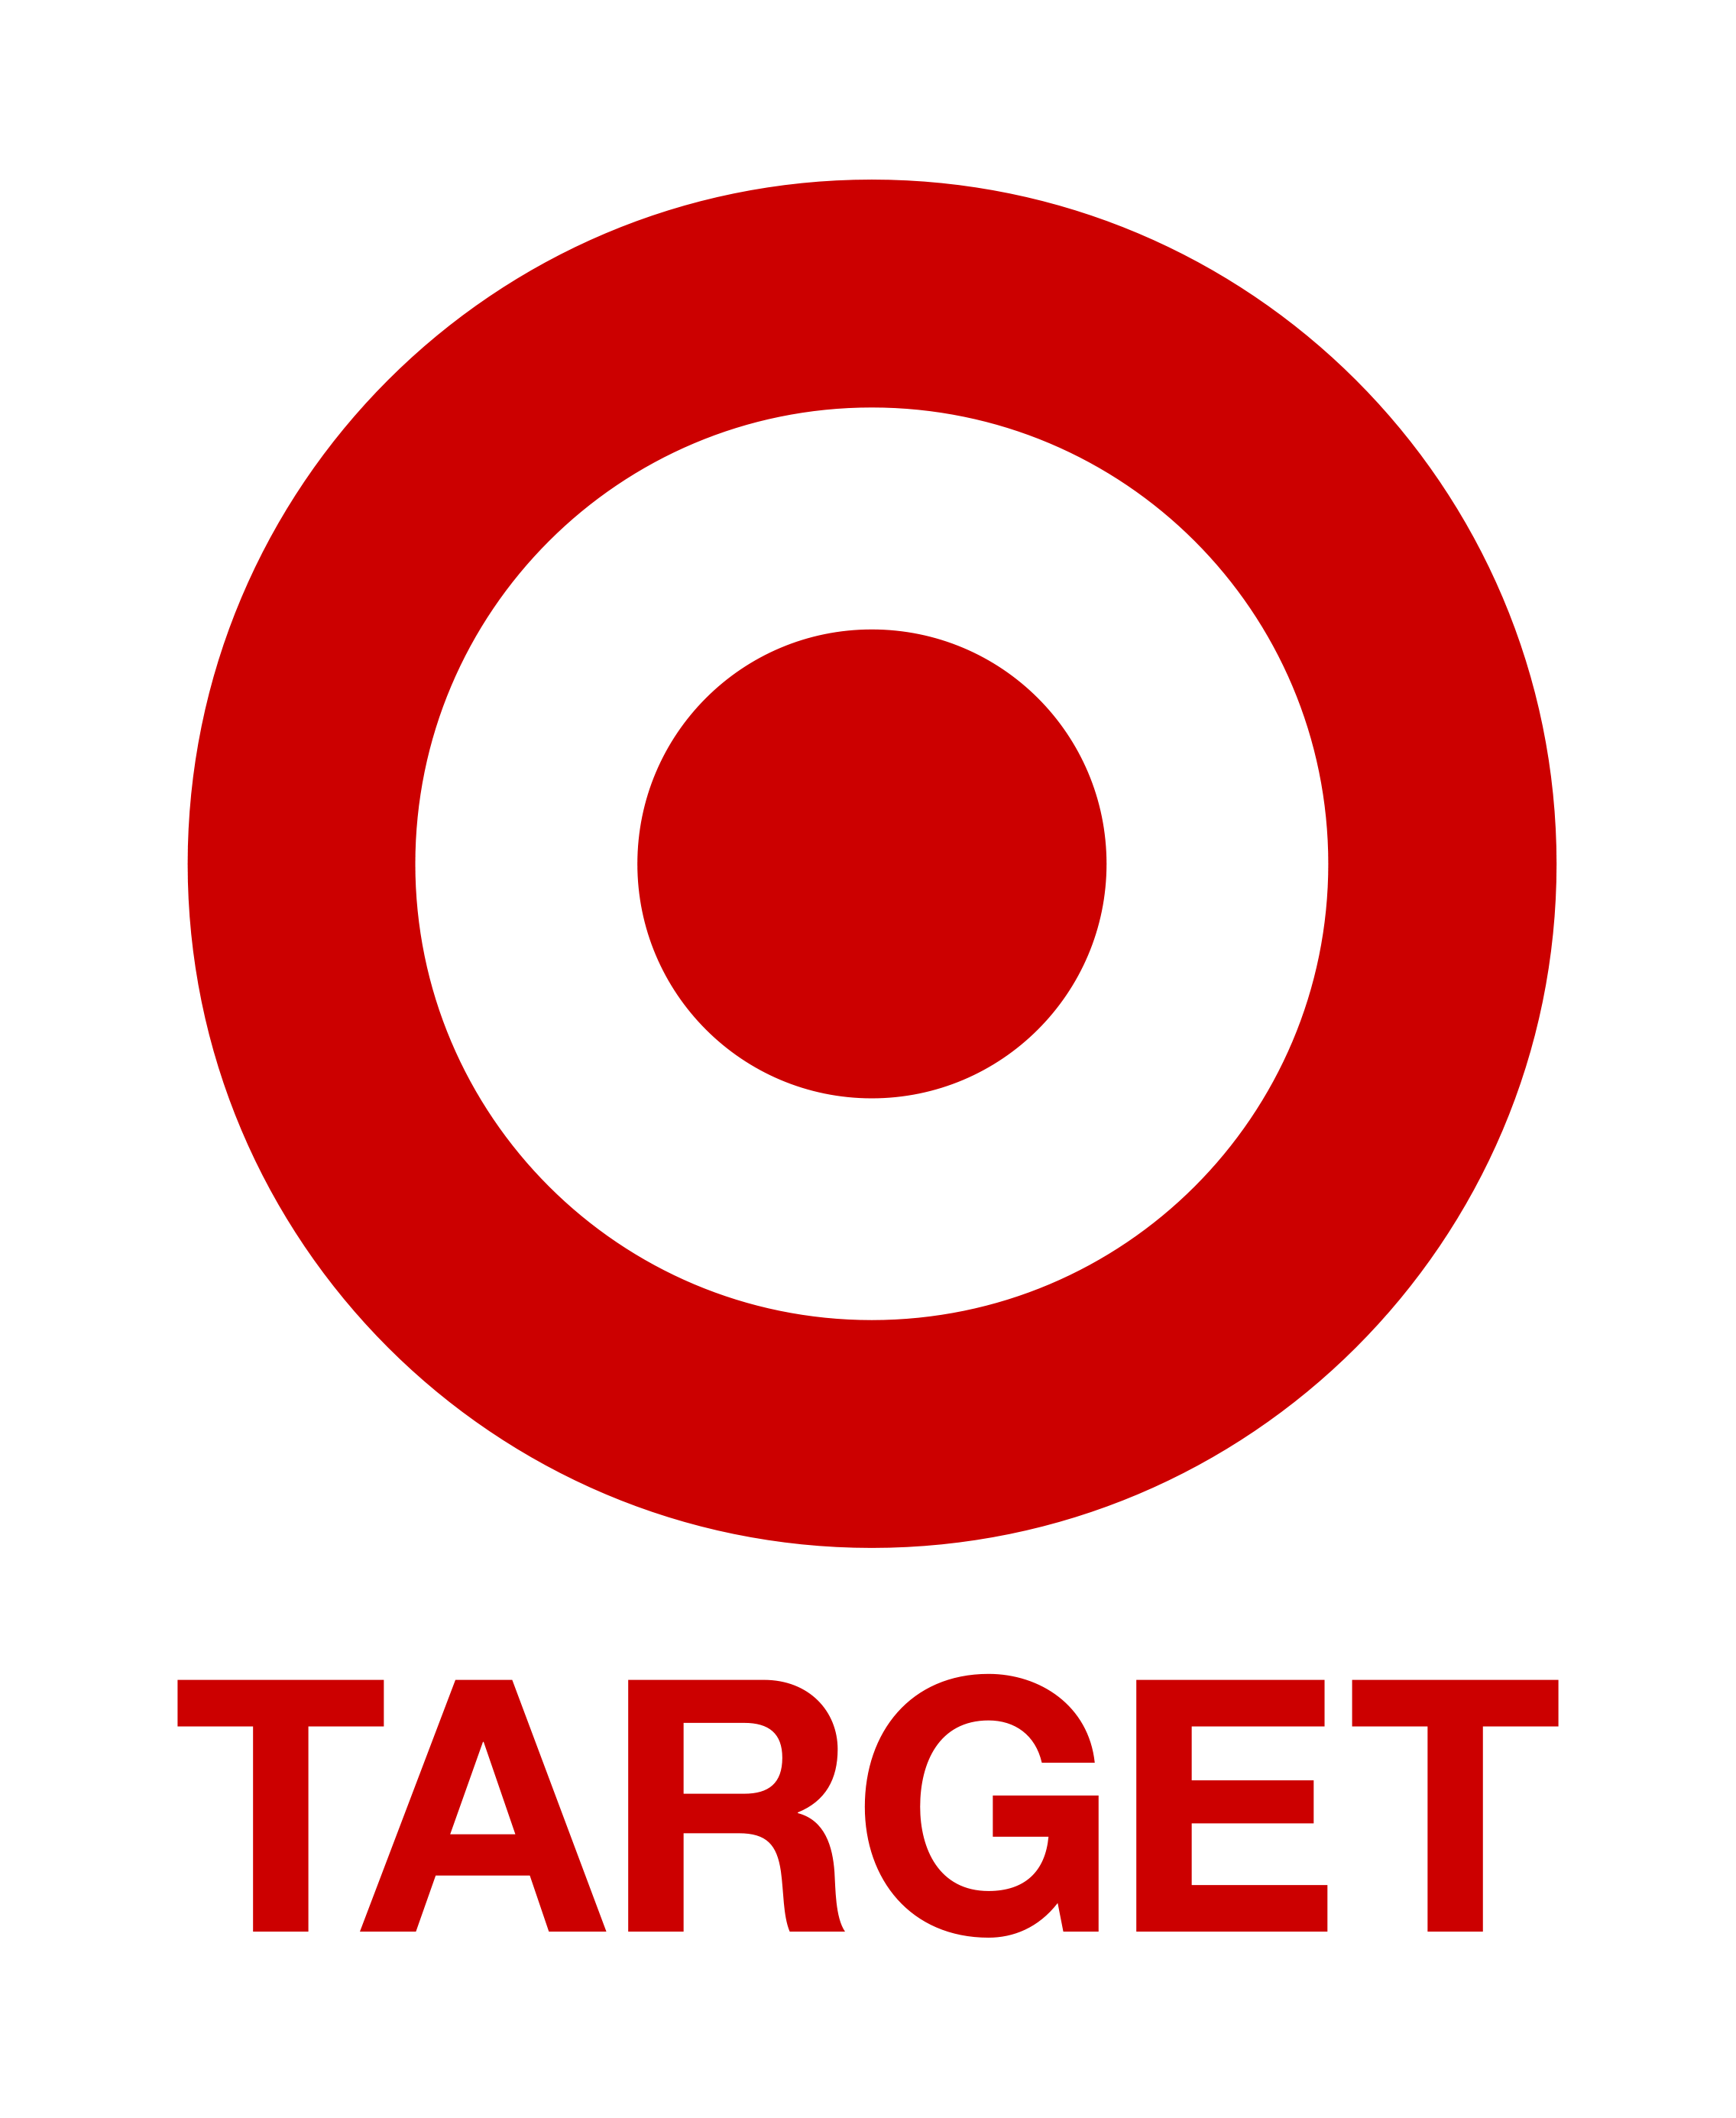 Target-logo-and-wordmark.png